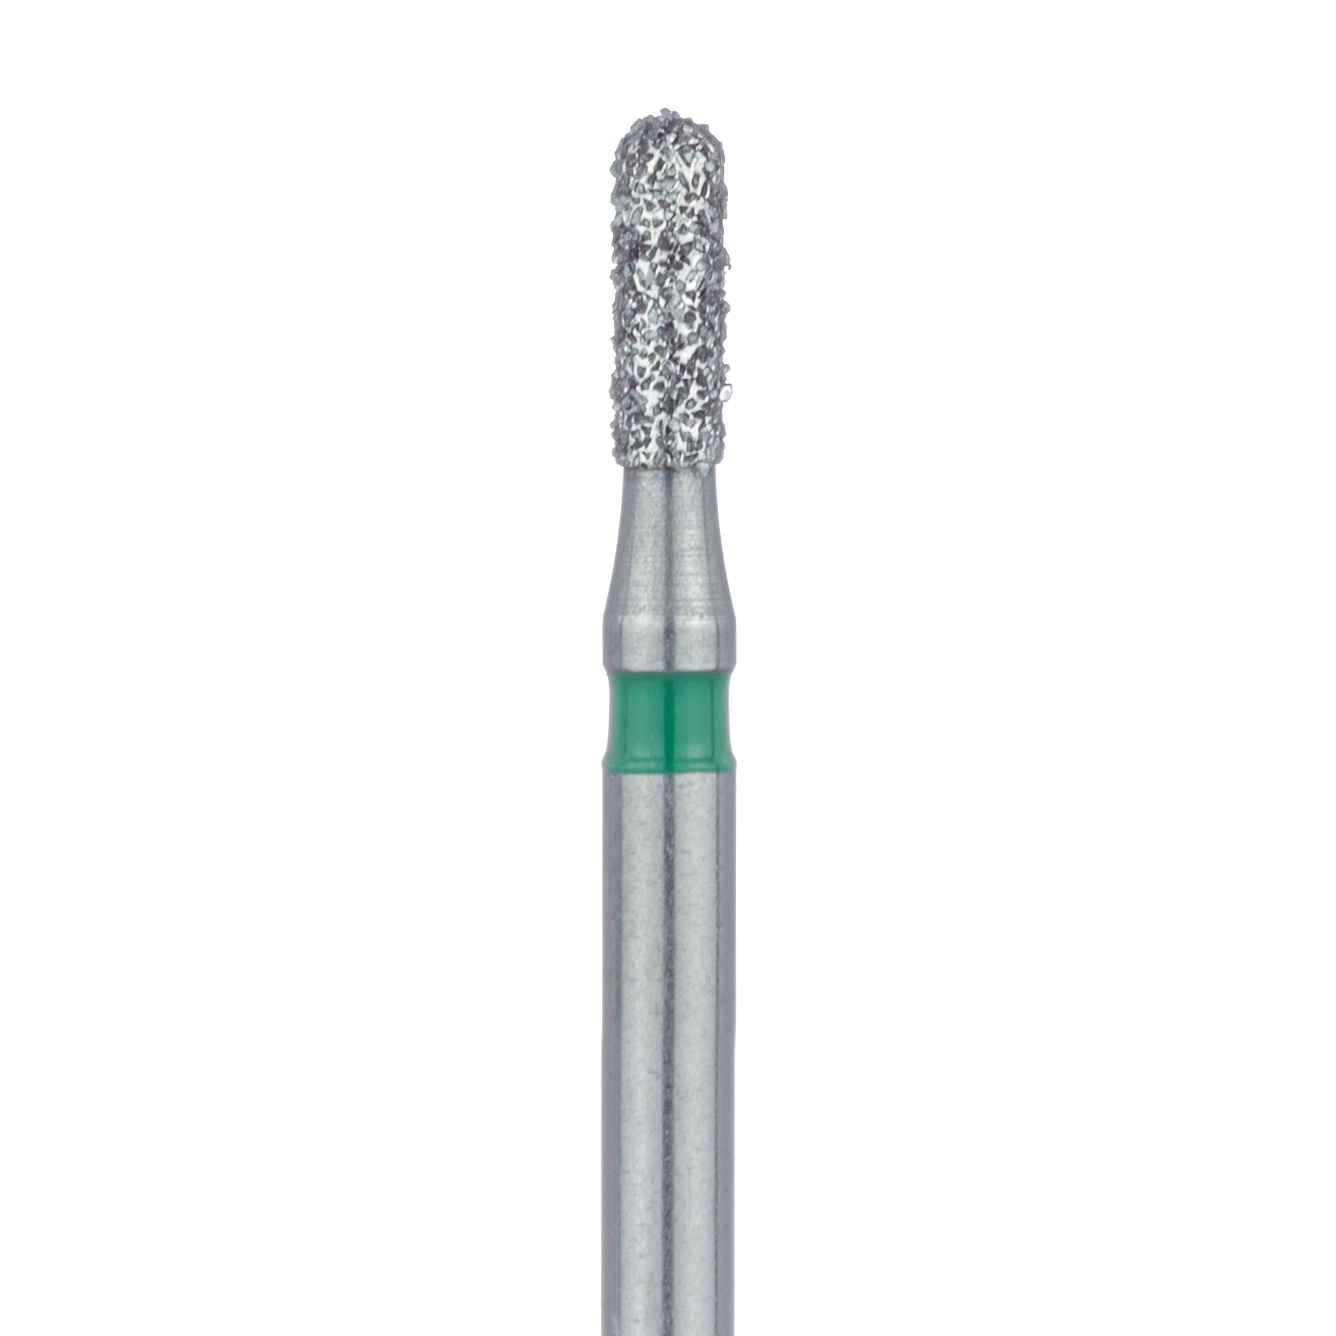 838G-014-FG Round End Cylinder Diamond Bur, 1.4mm Ø, Coarse, FG